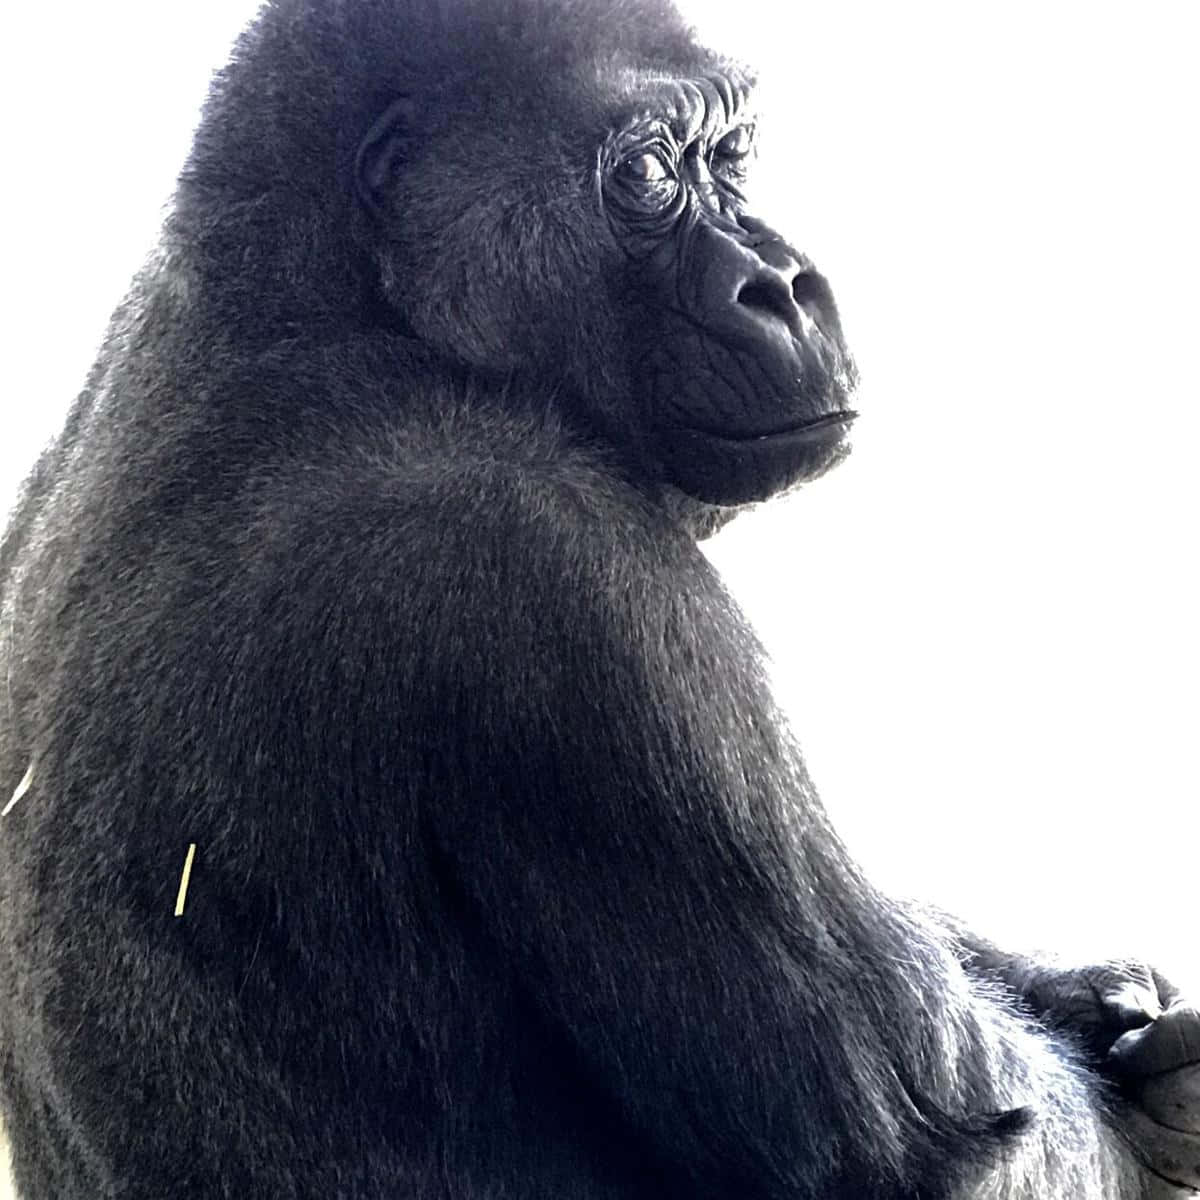 Adorable Gorilla Poses For the Camera Wallpaper